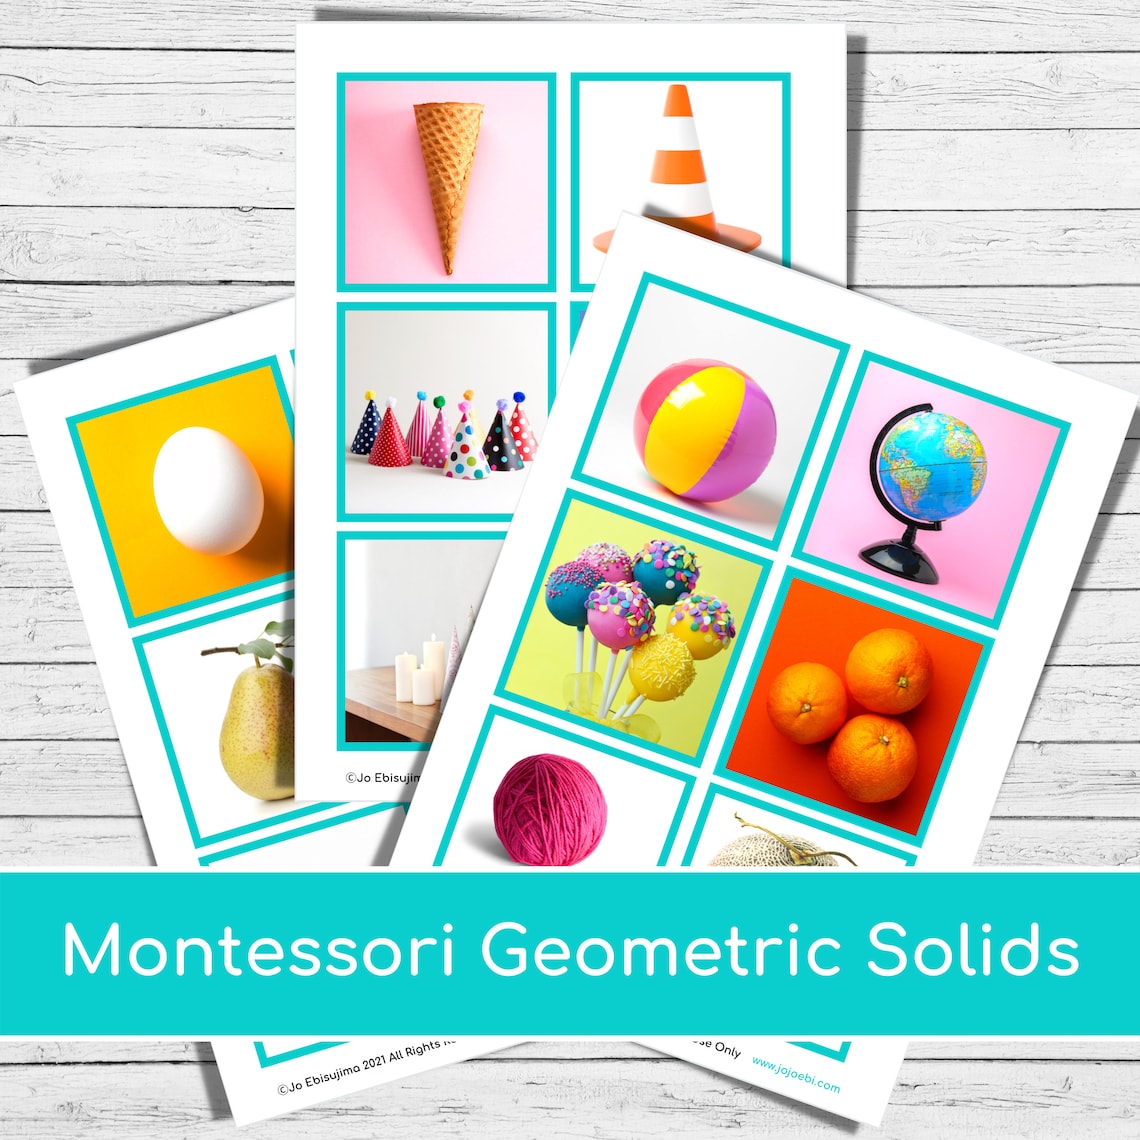 Montessori Geometric Solids 3 Part Cards Pdf Montessori Etsy